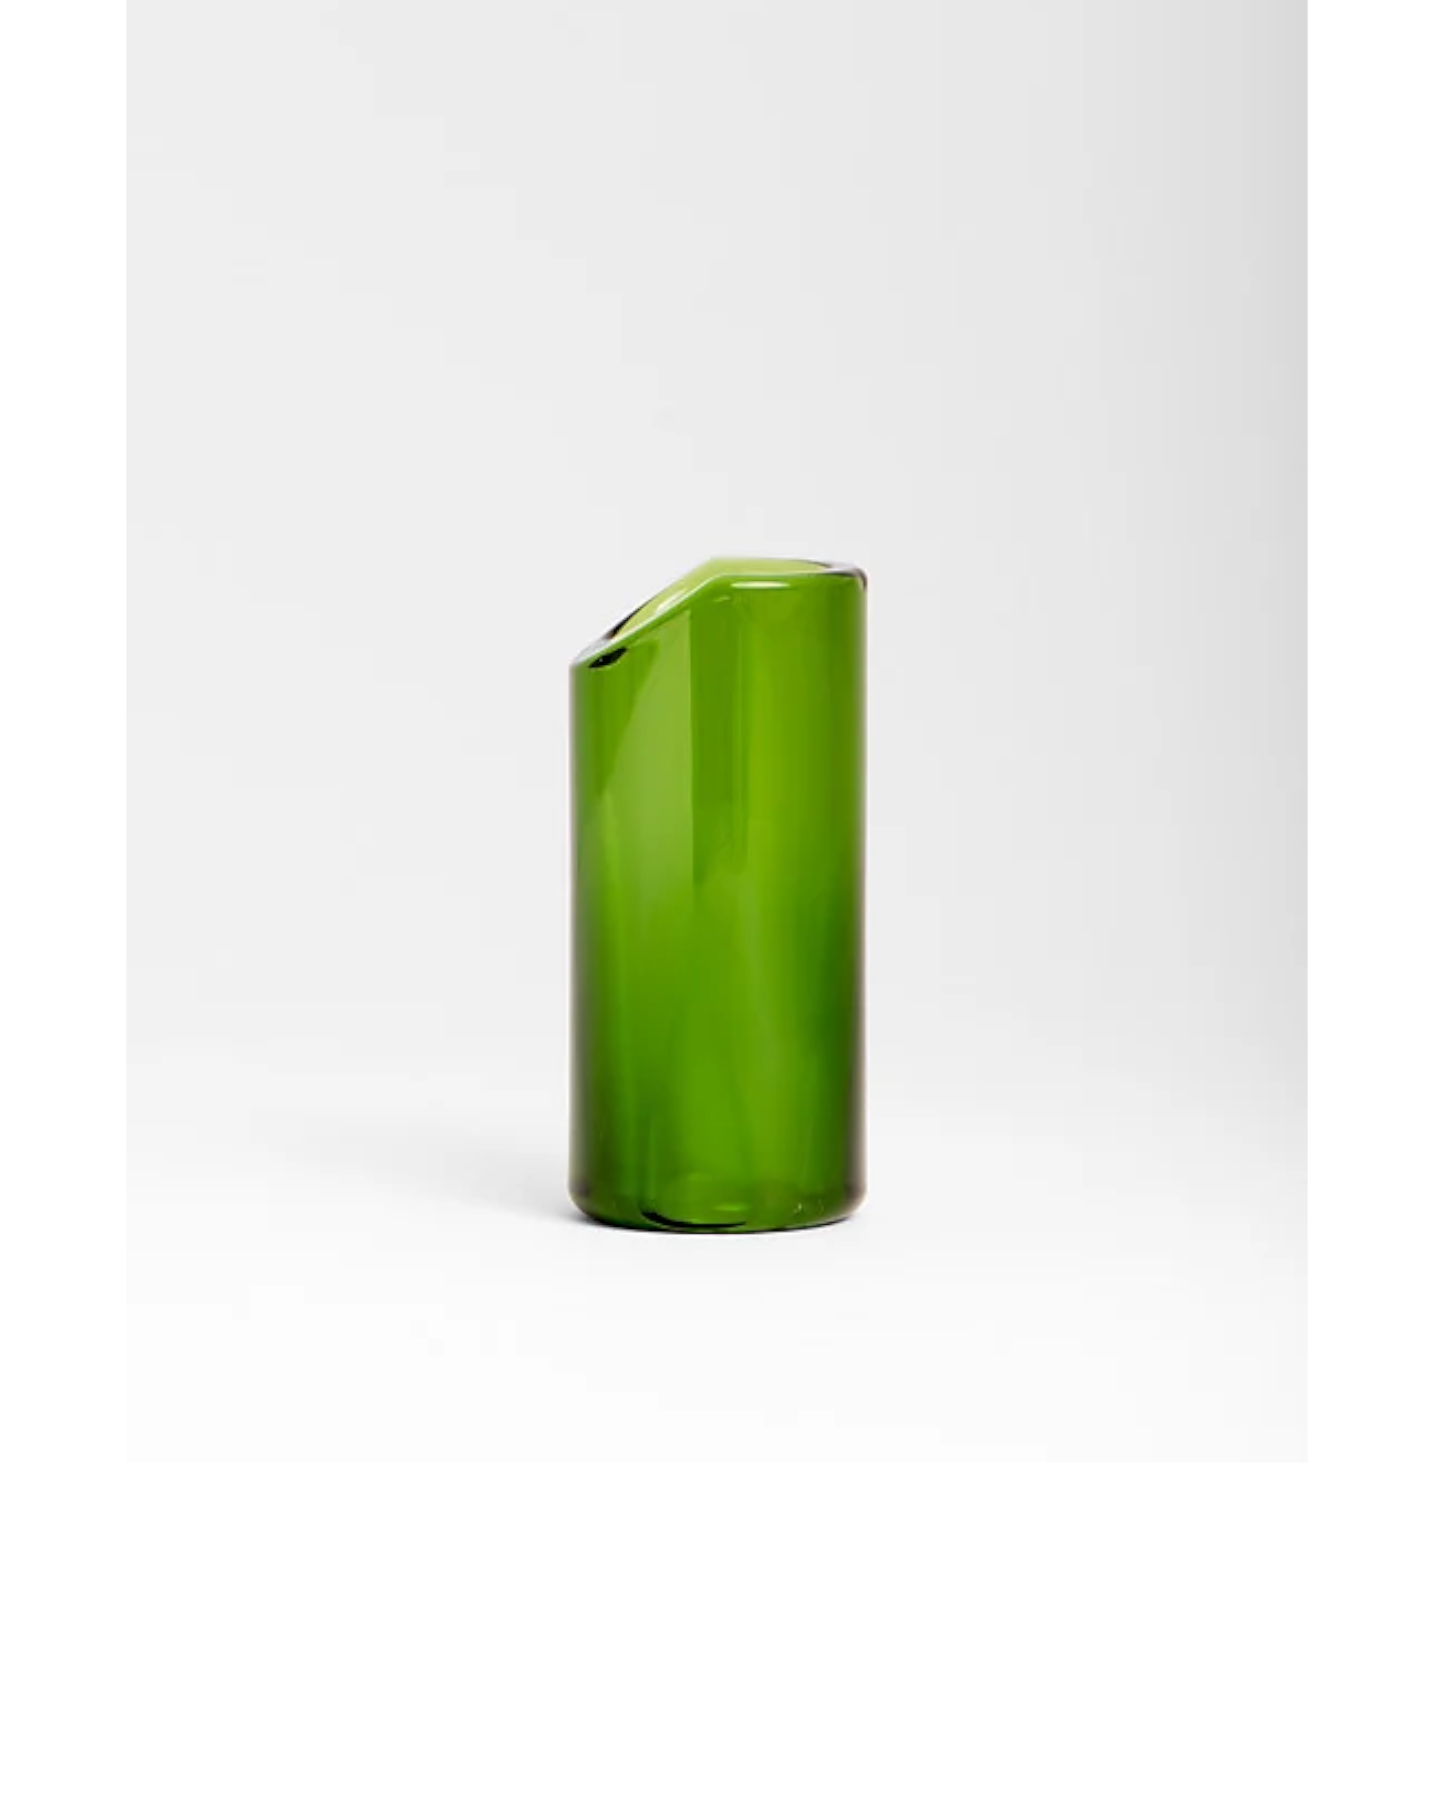 The Rock Slide Medium Green Glass